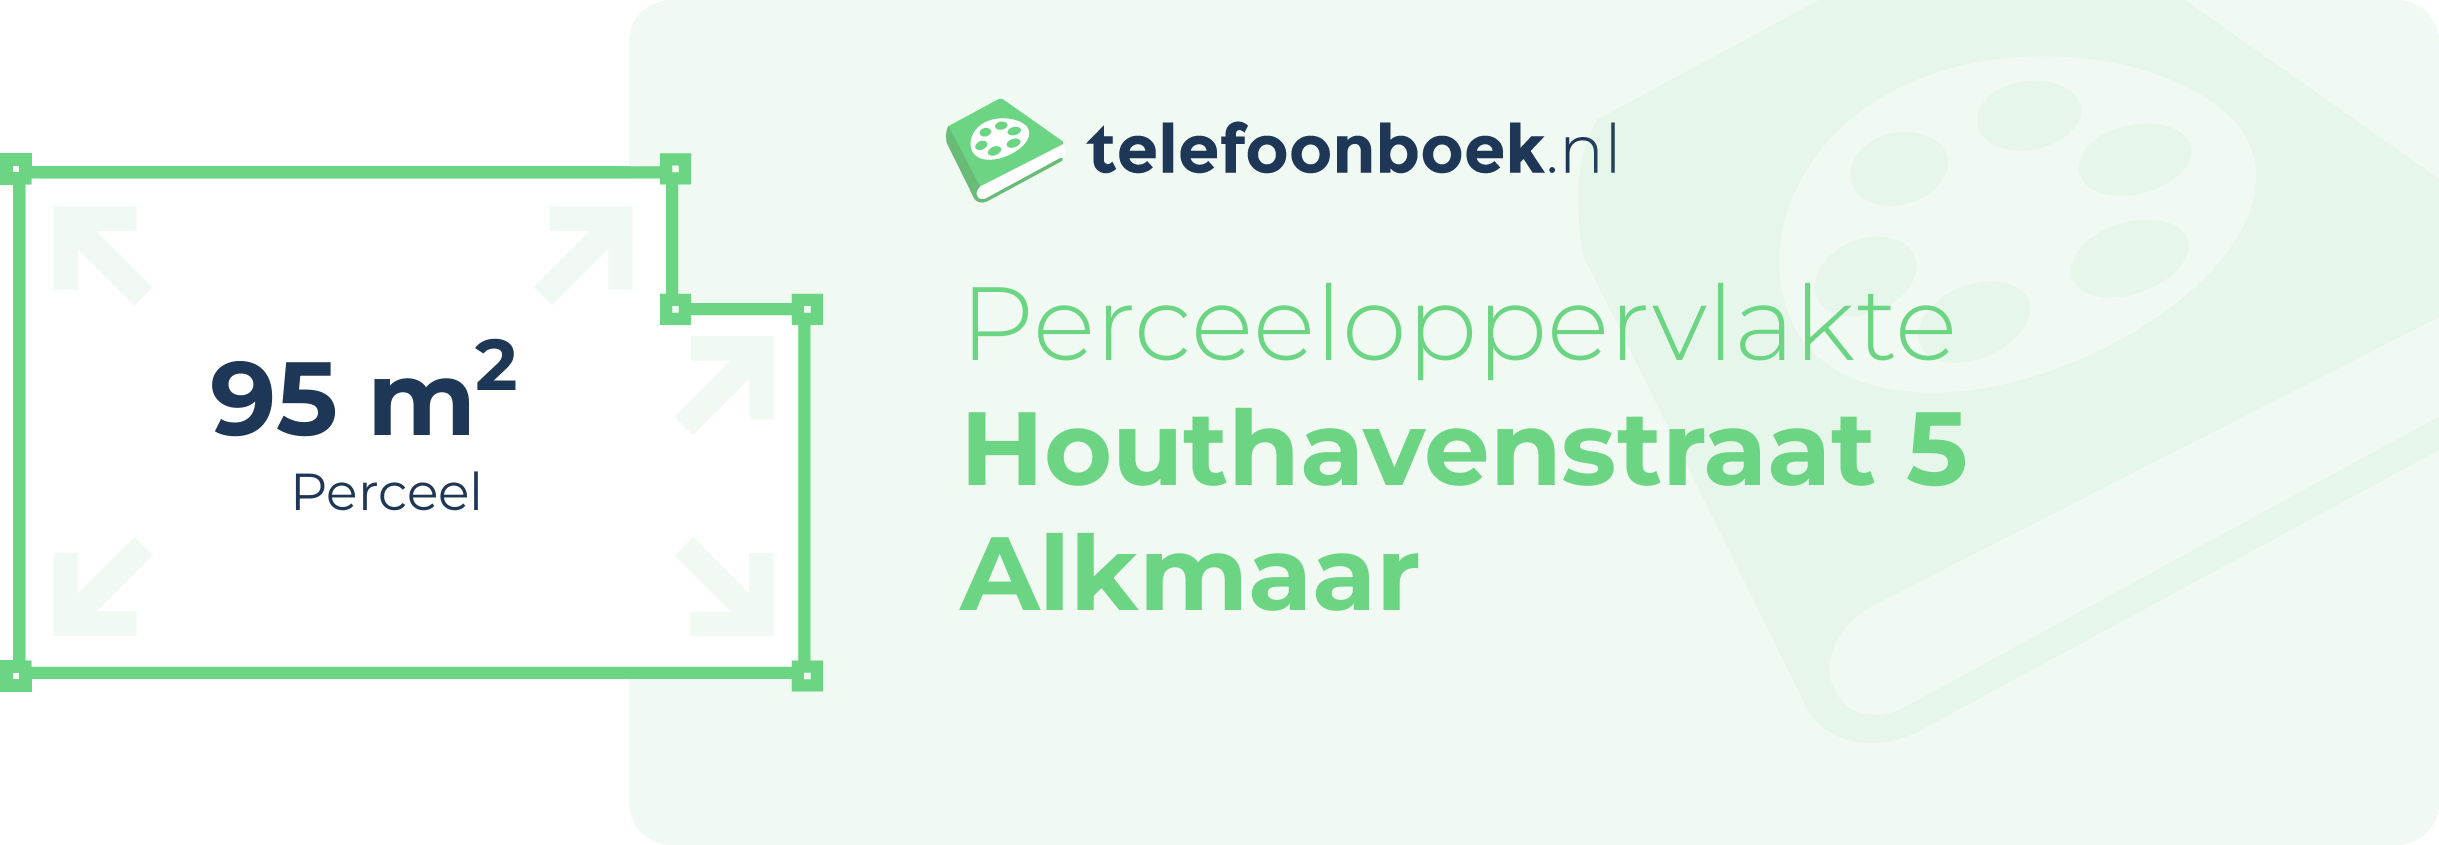 Perceeloppervlakte Houthavenstraat 5 Alkmaar